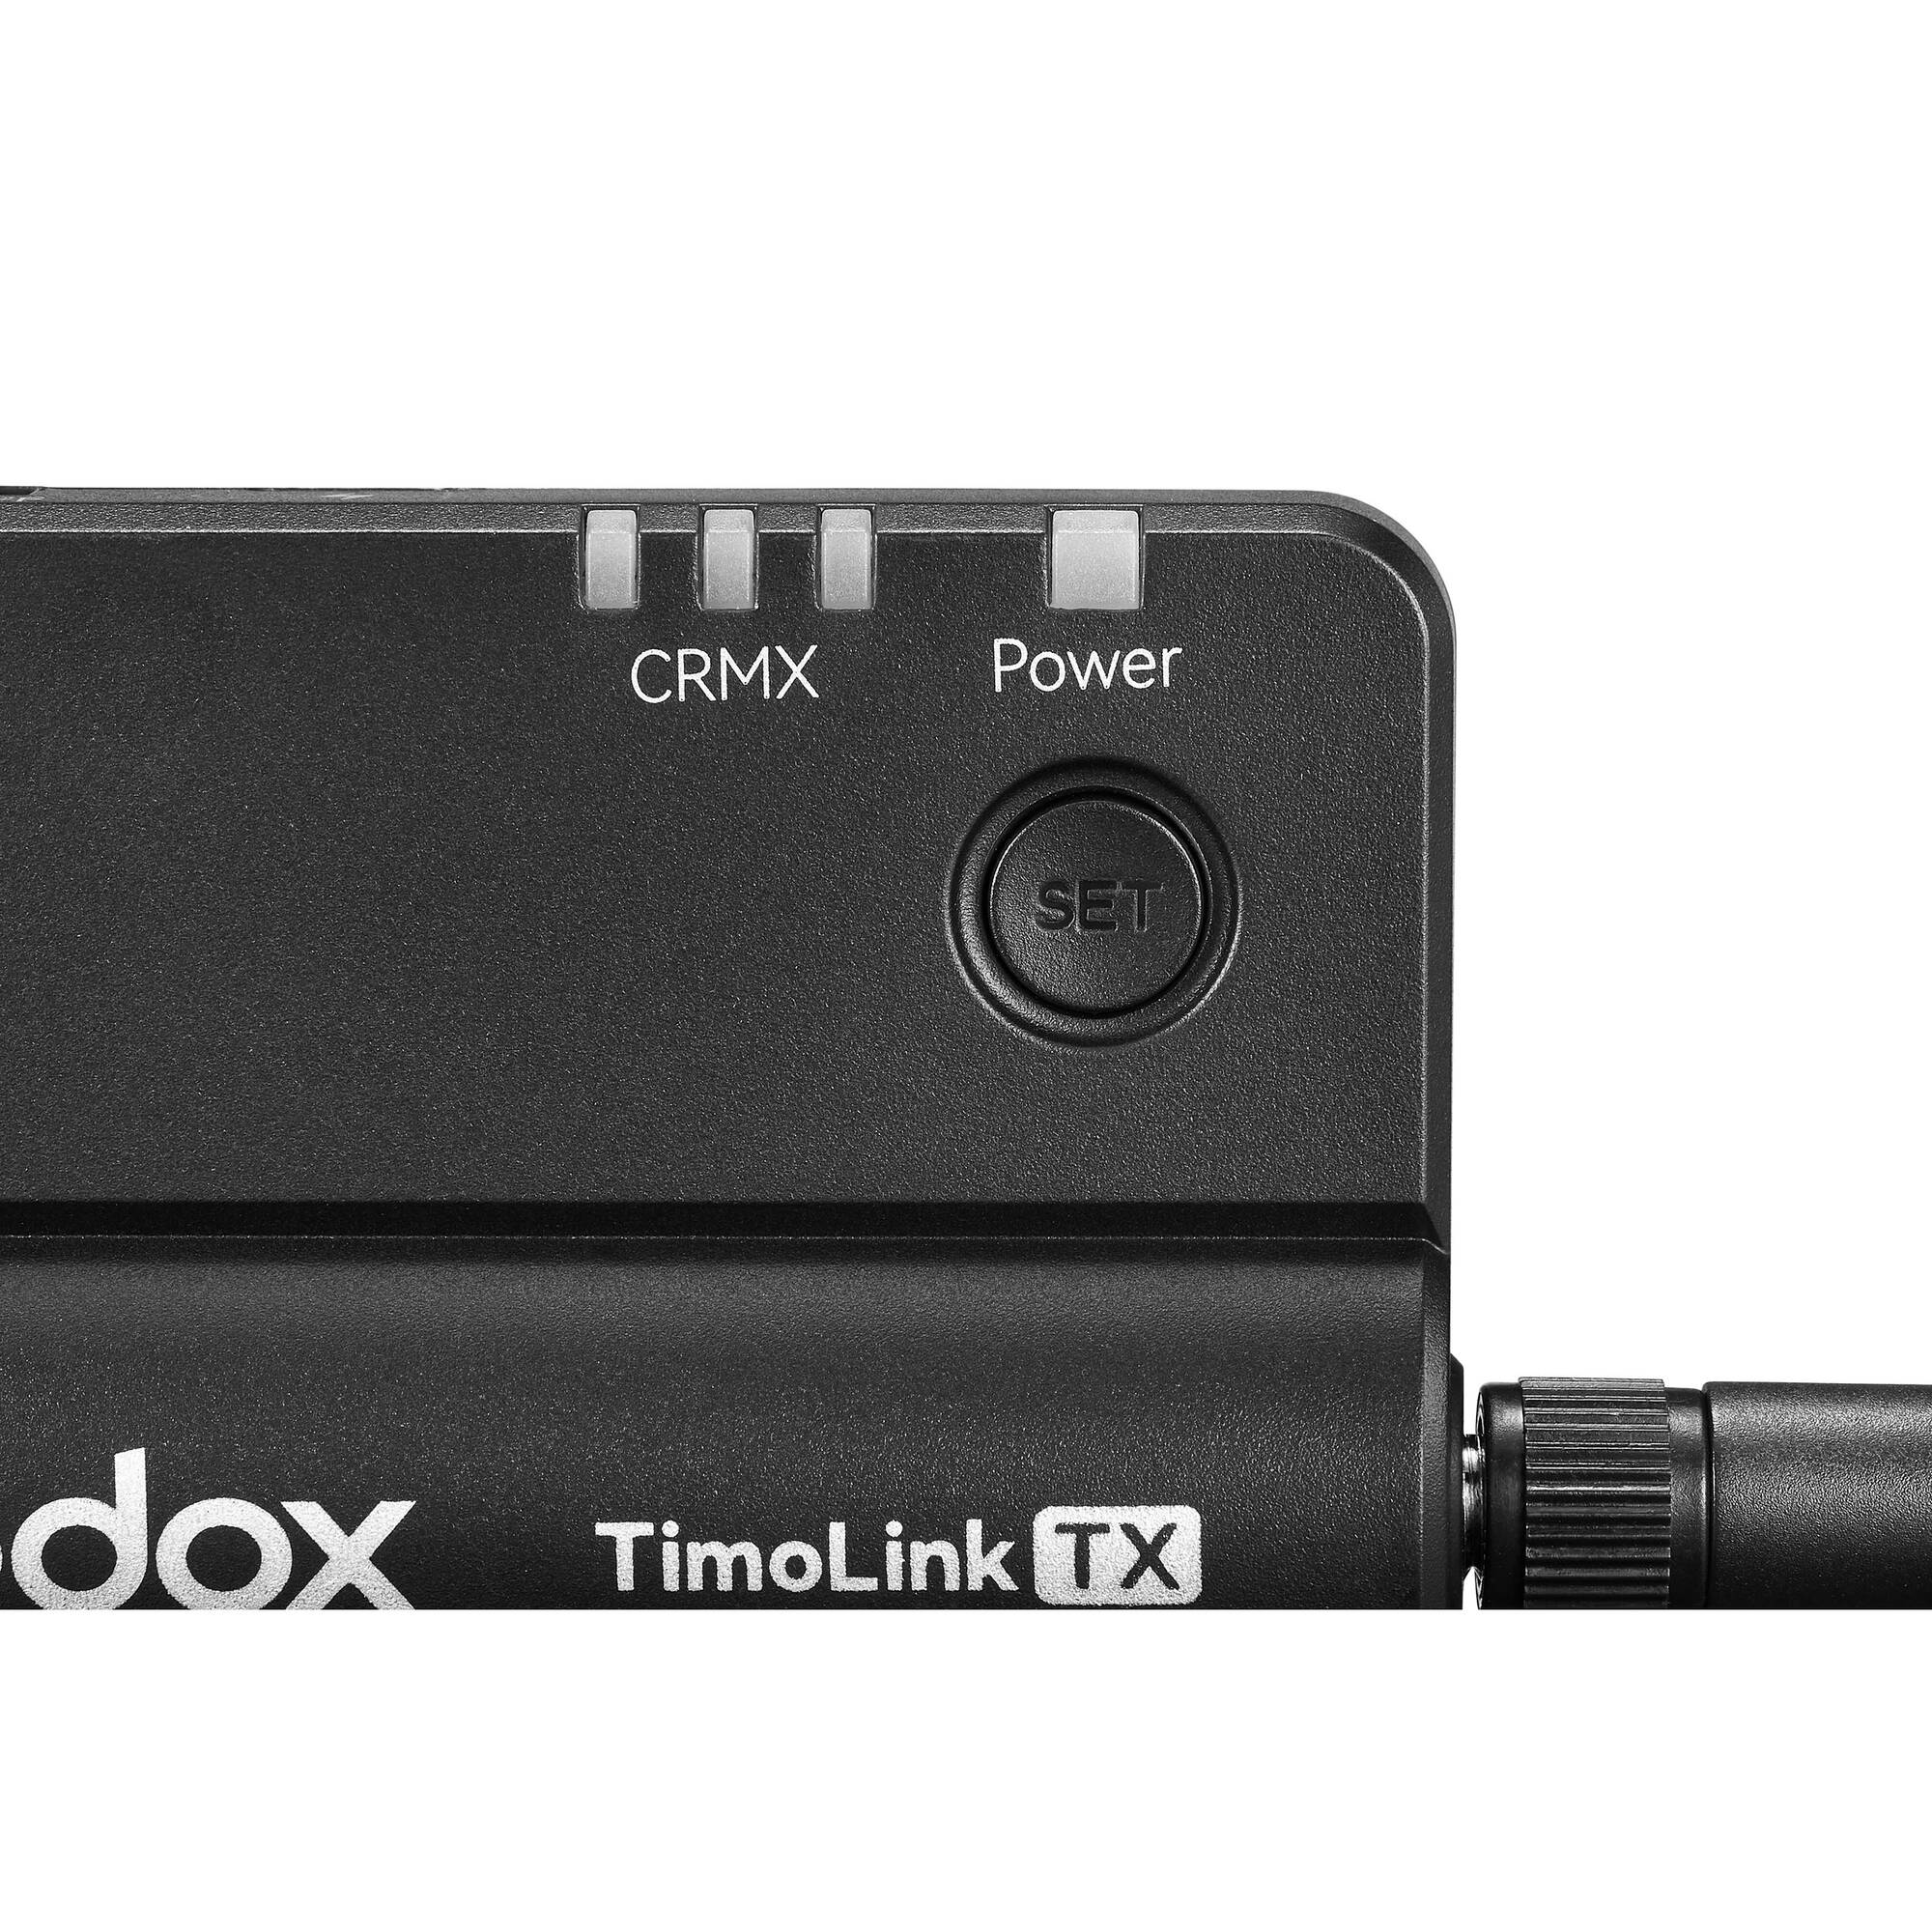   DMX- Godox TimoLink TX   Ultra-mart